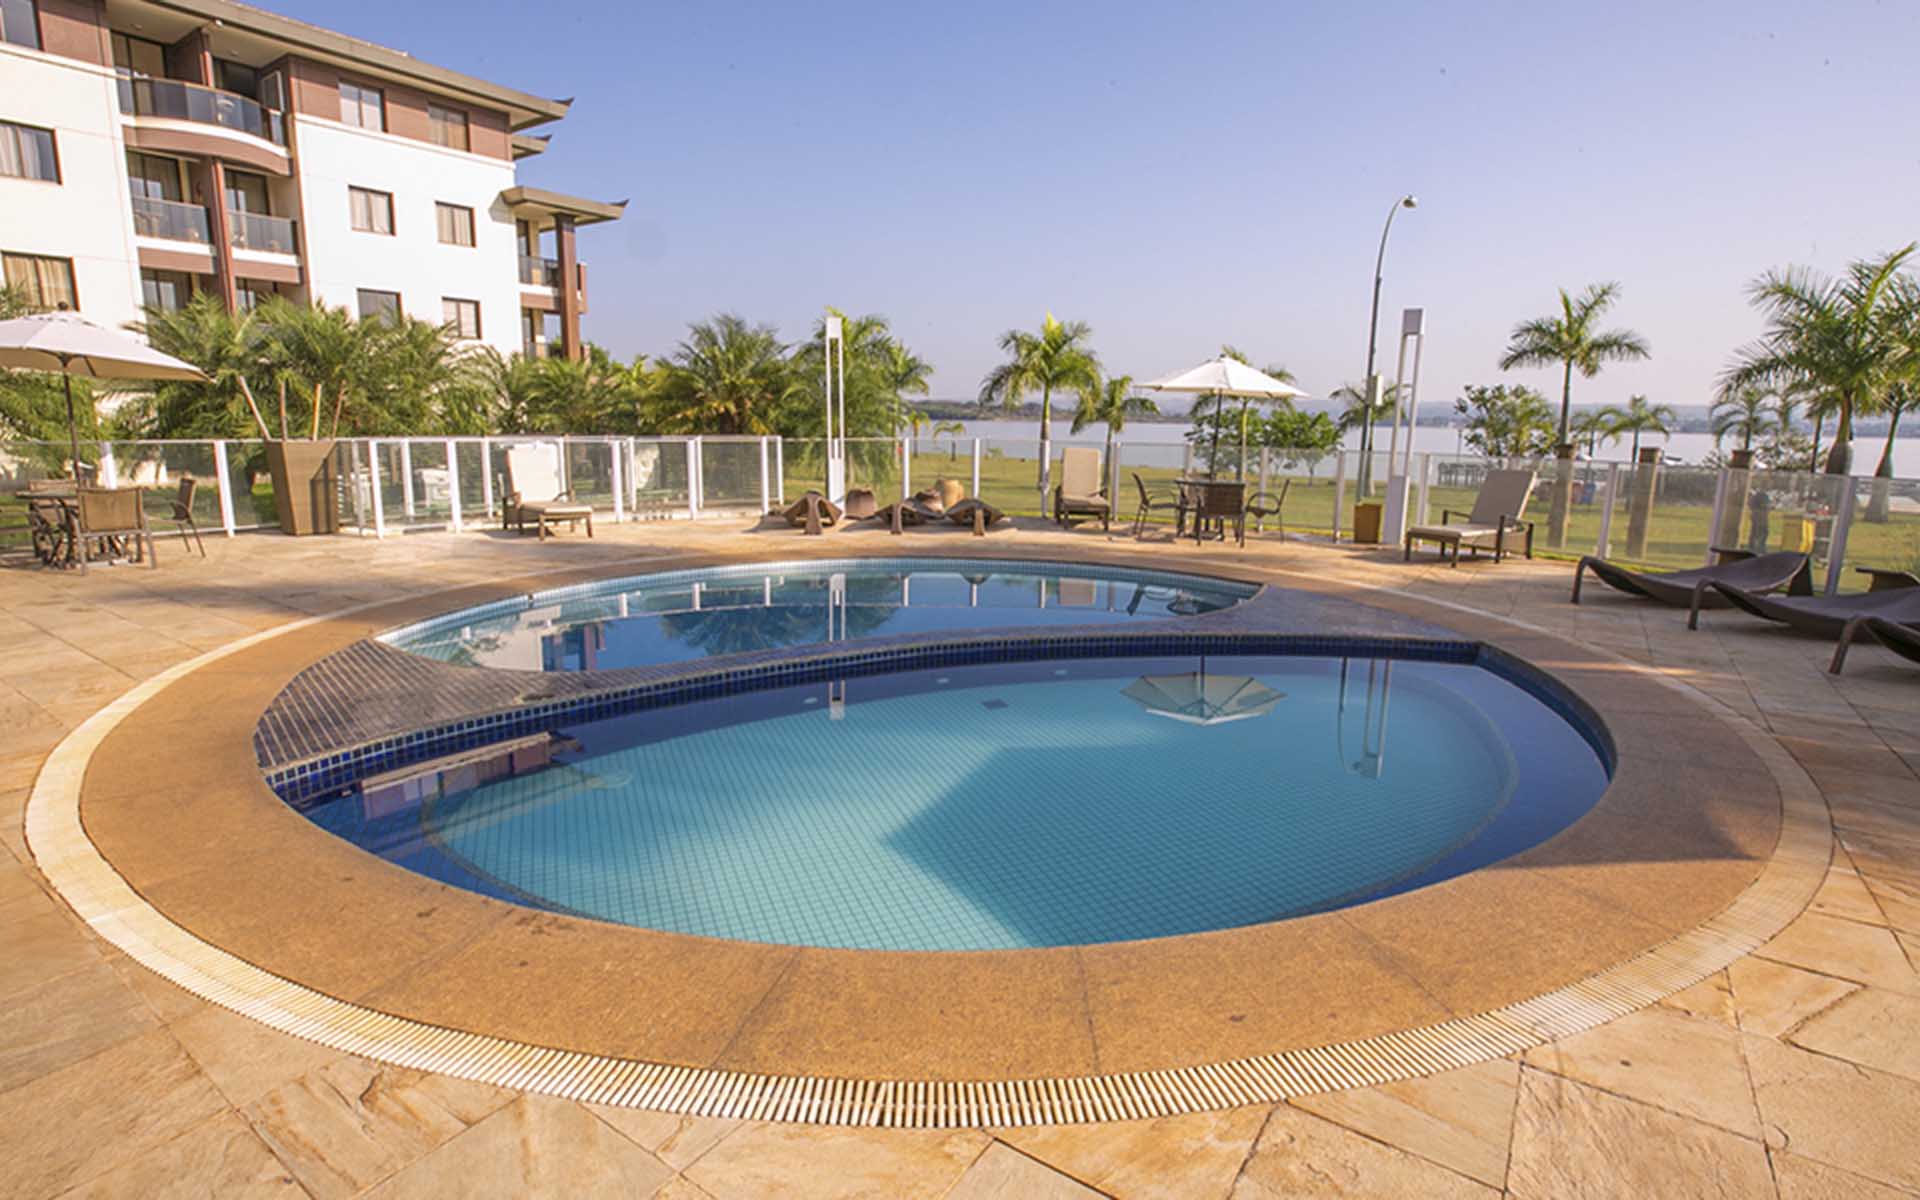 piscina do apart hotel flat em brasilia life resort hplus long stay